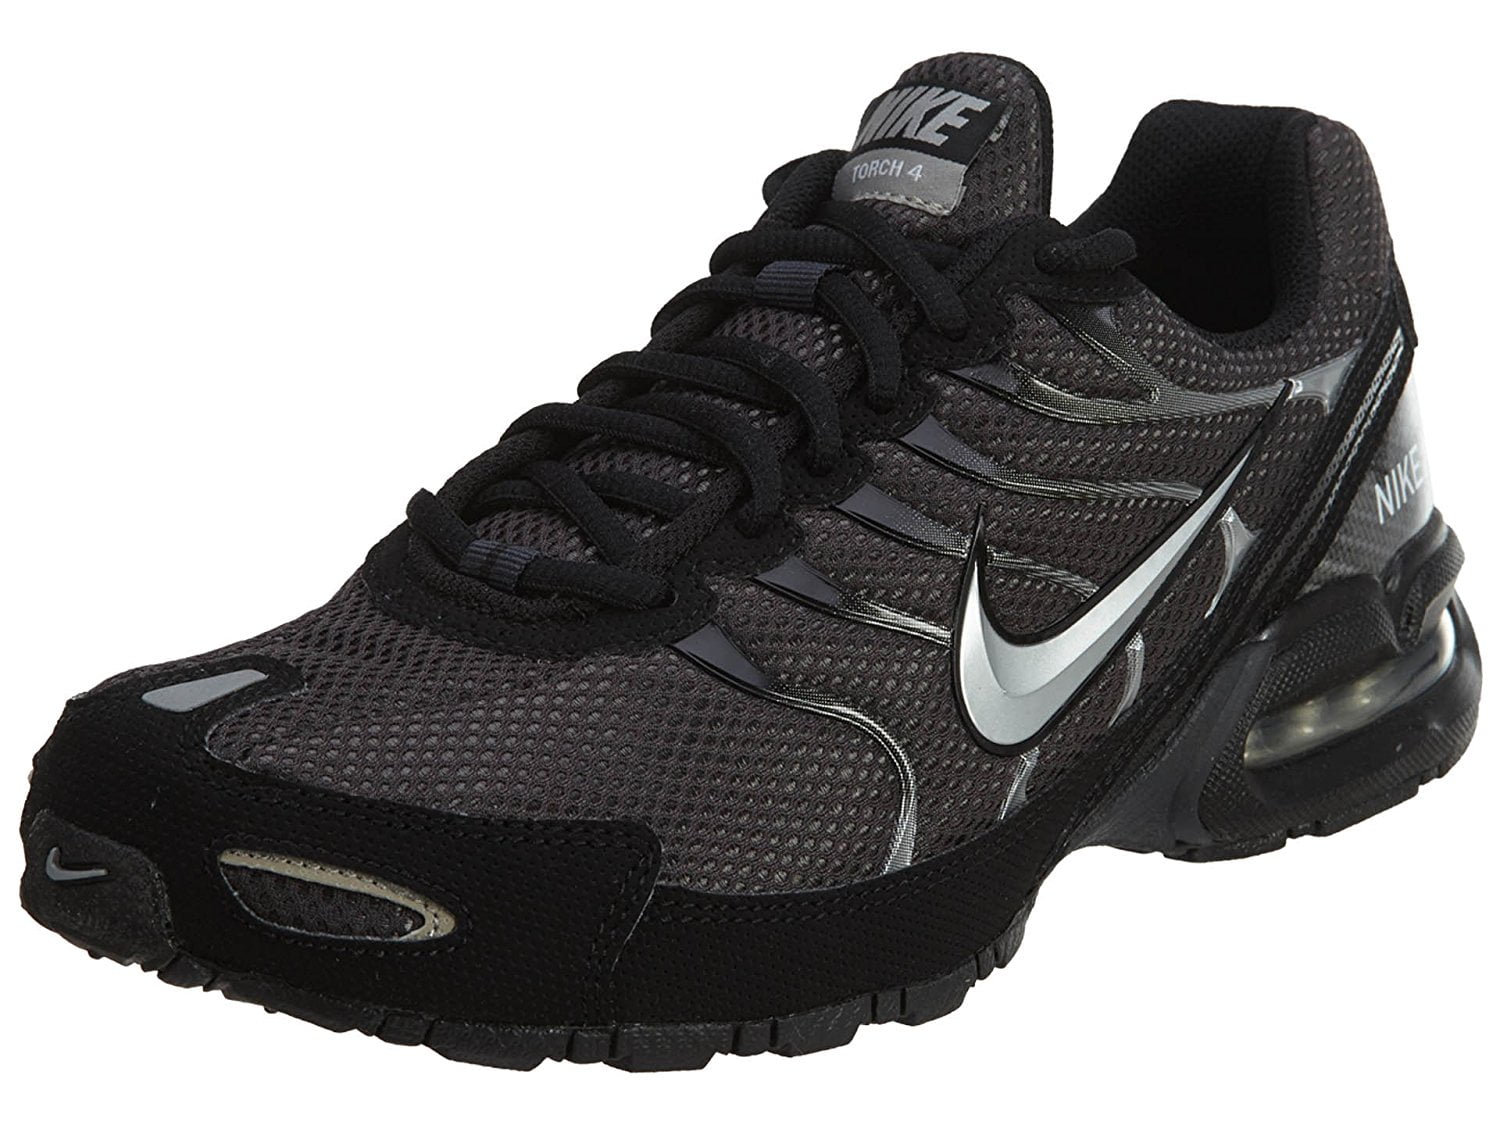 Nike - Nike Mens Air Max Torch 4 Running Shoe #343846-002, Anthracite